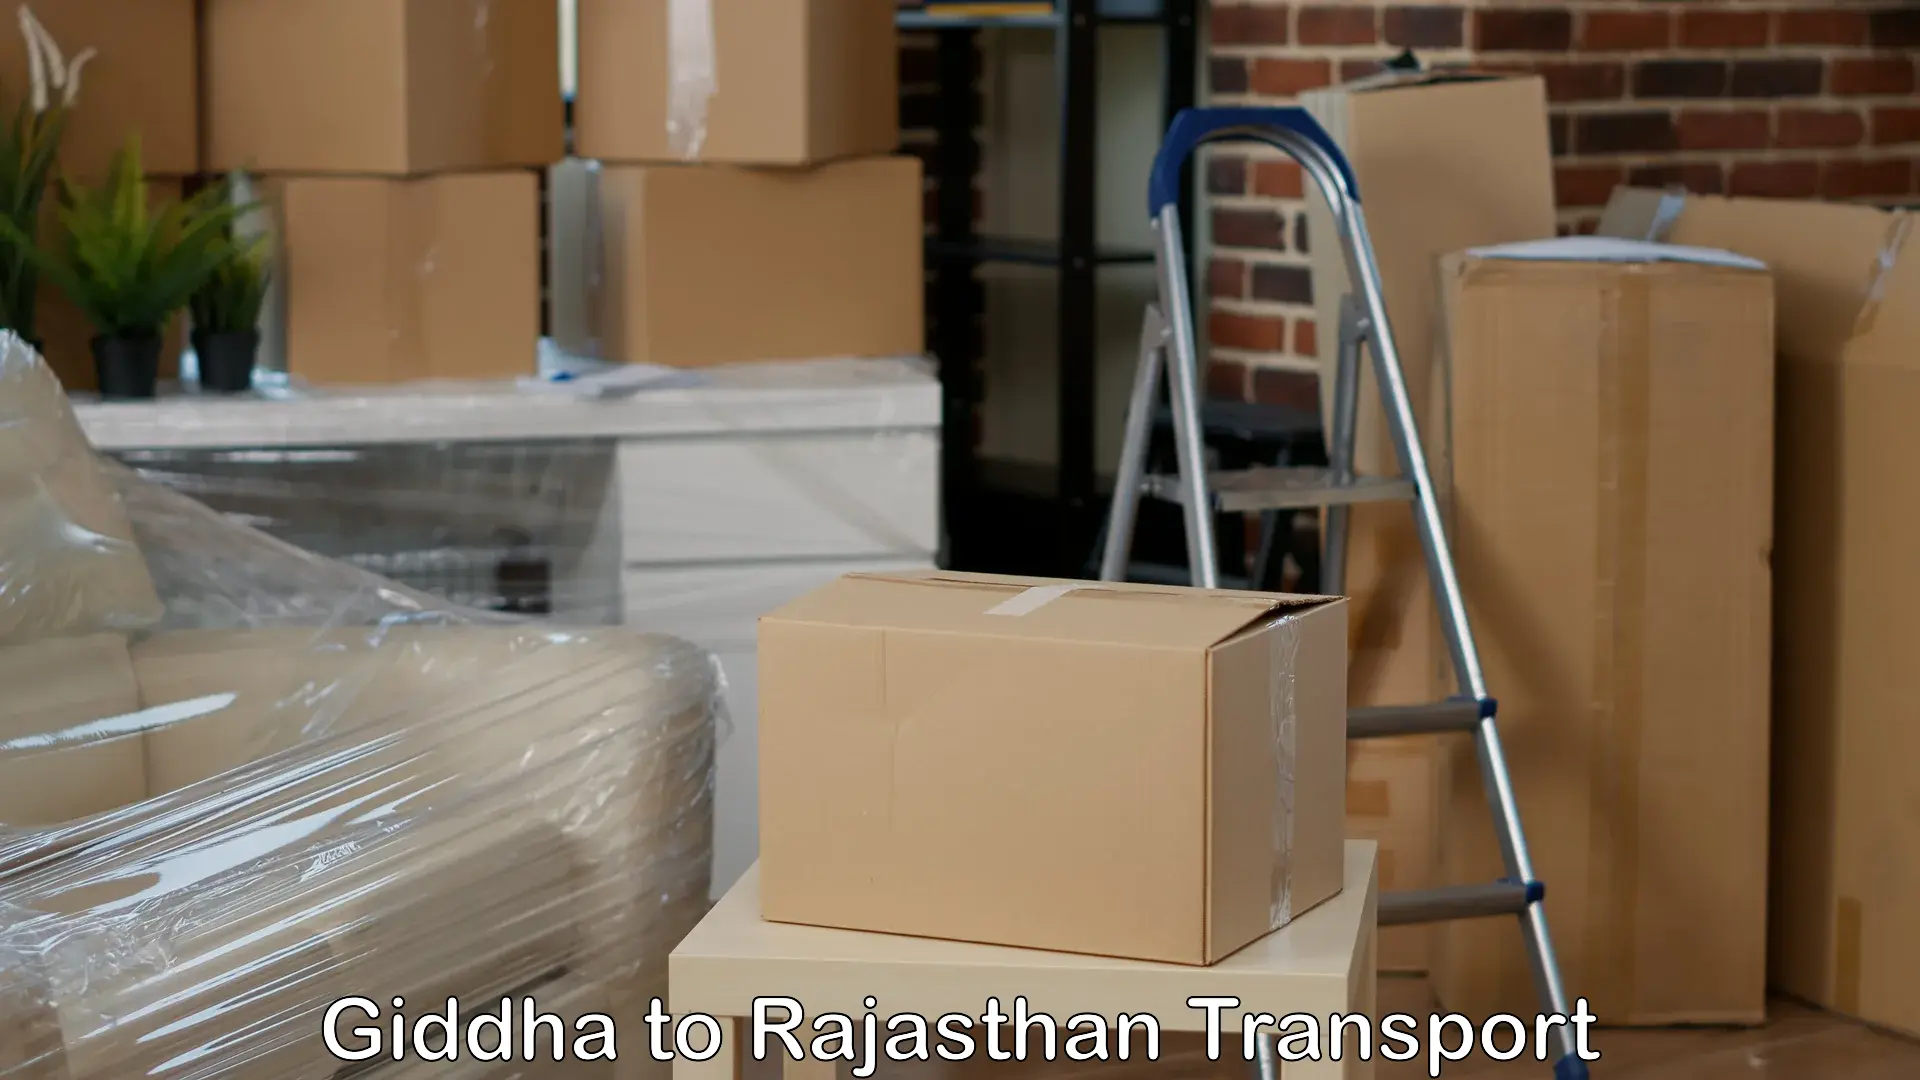 Daily parcel service transport Giddha to Jodhpur